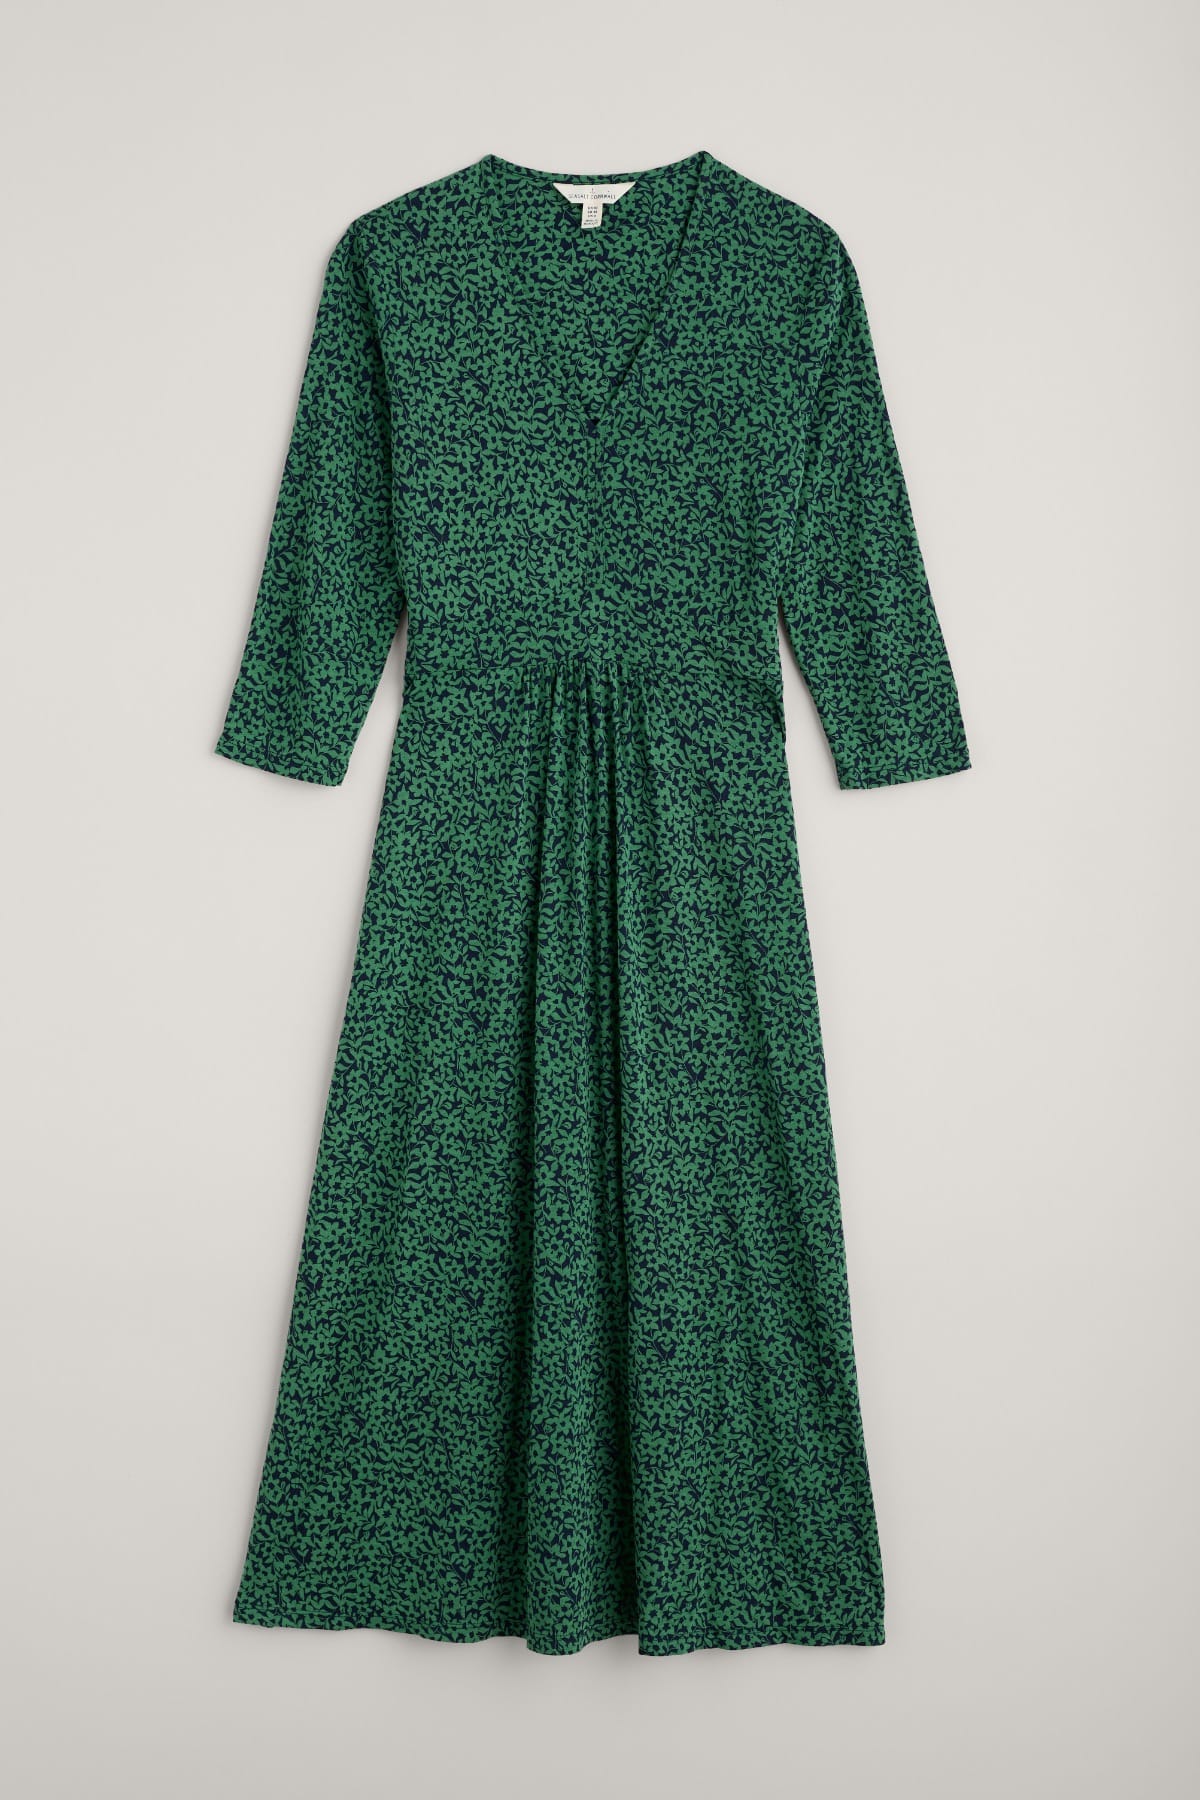 Carwynnen Green Ditsy Mode Bella ⋆ Kleid ⋆ Nachhaltige